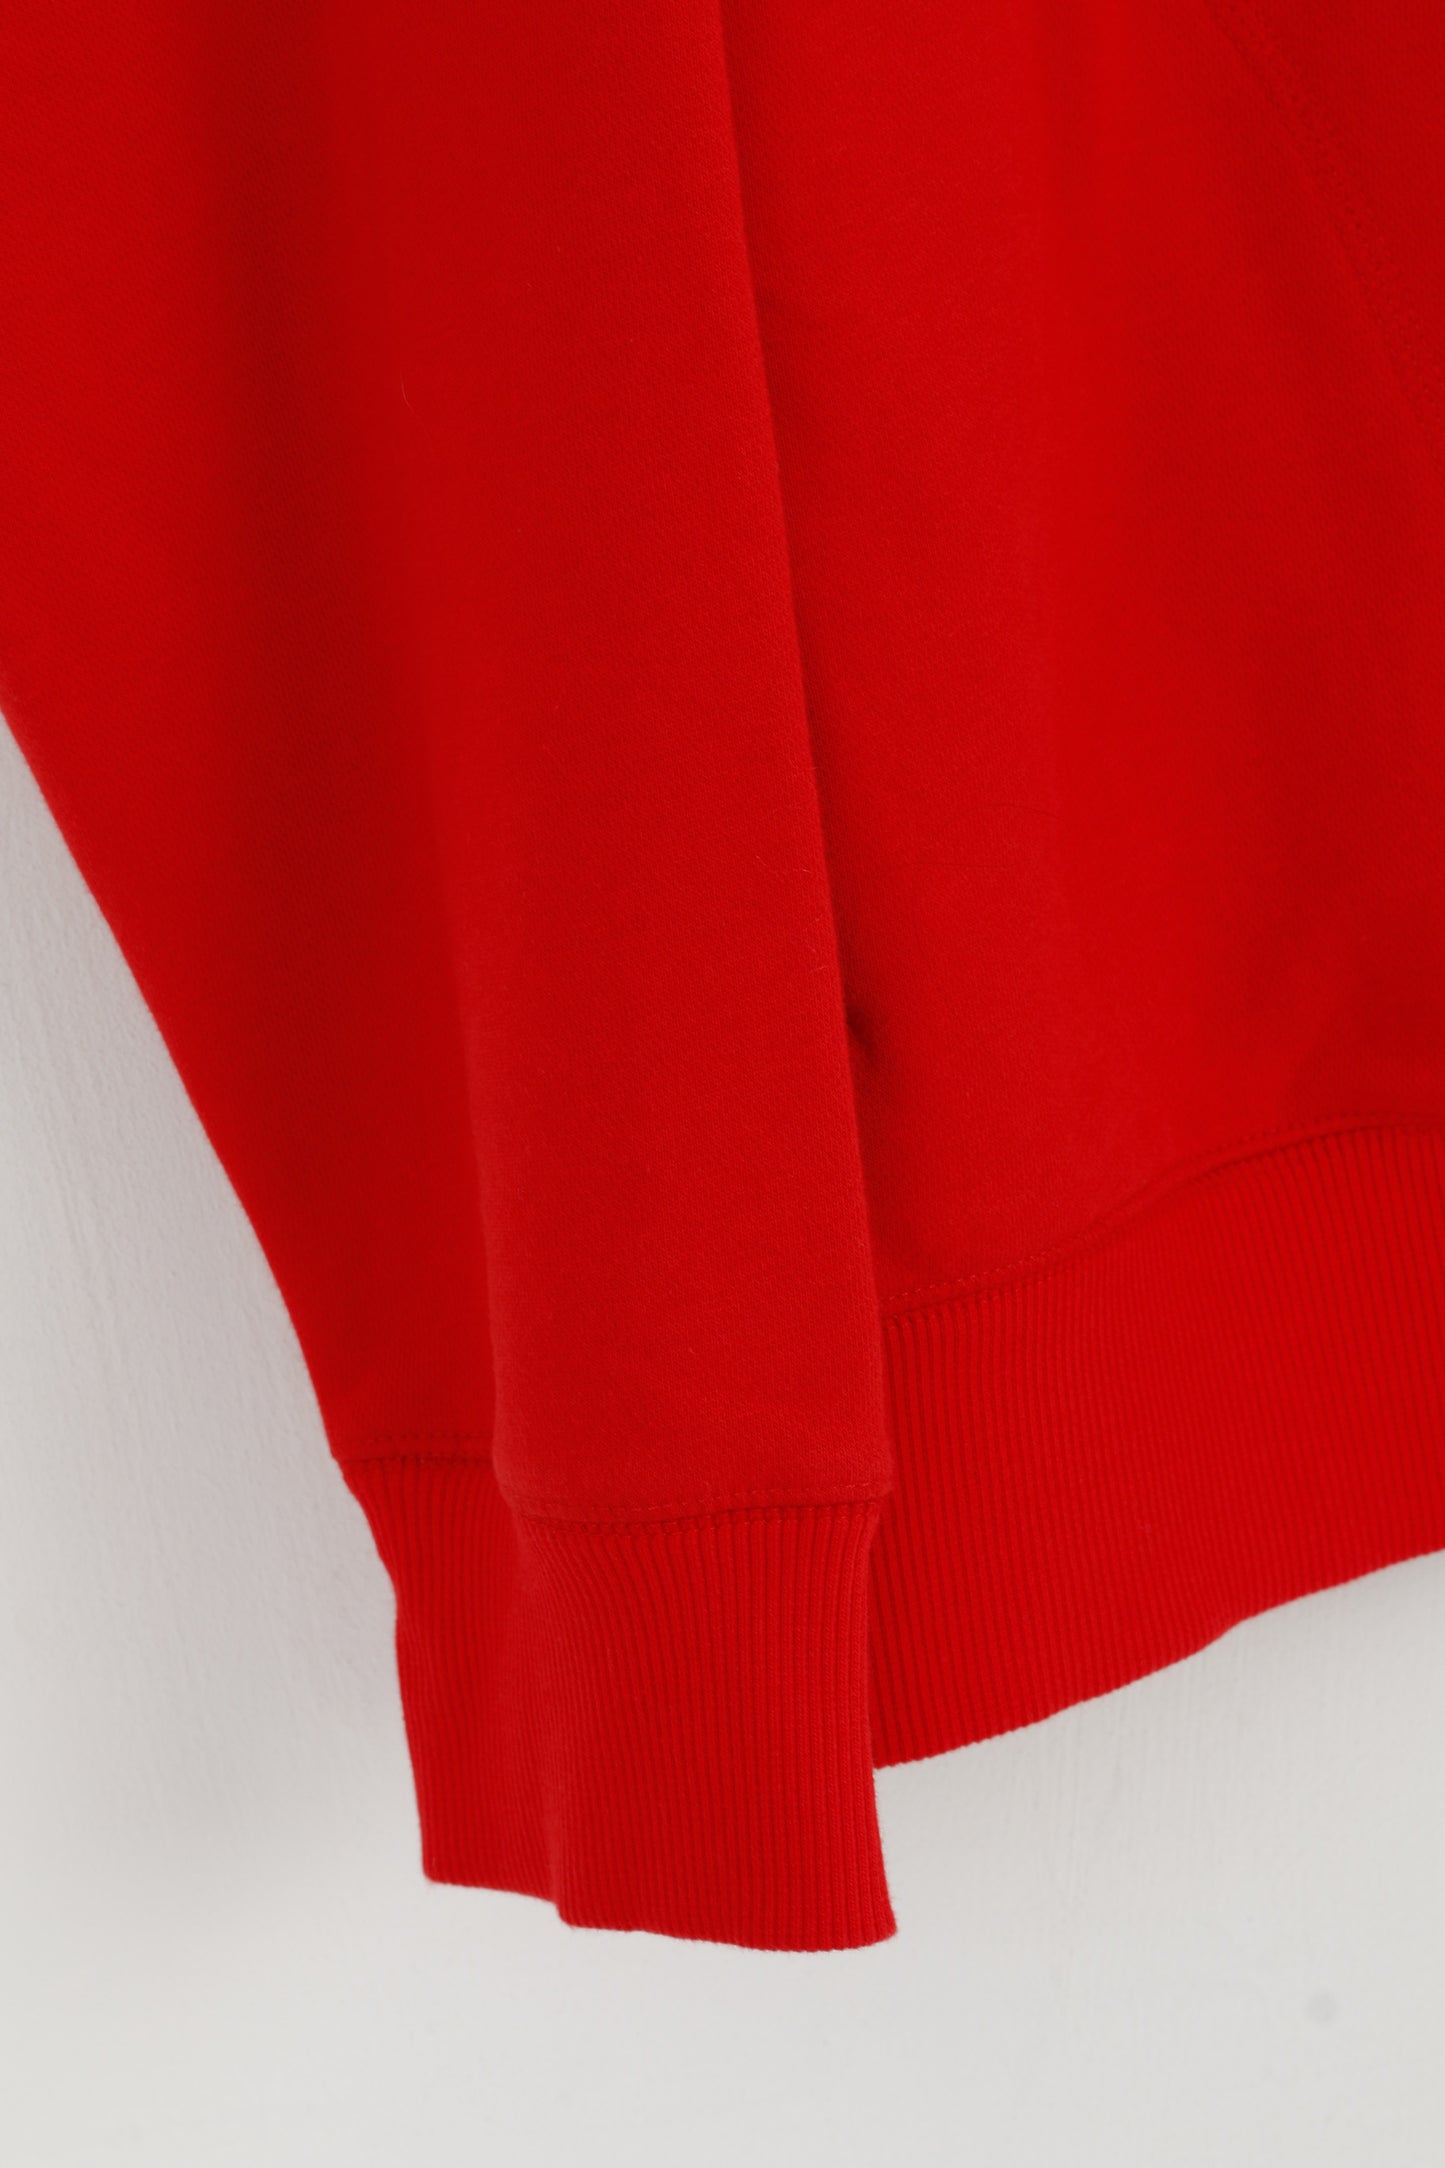 Nike Men XL 188 Sweatshirt Rouge Coton Full Zipper Team Logo Active Sportswear